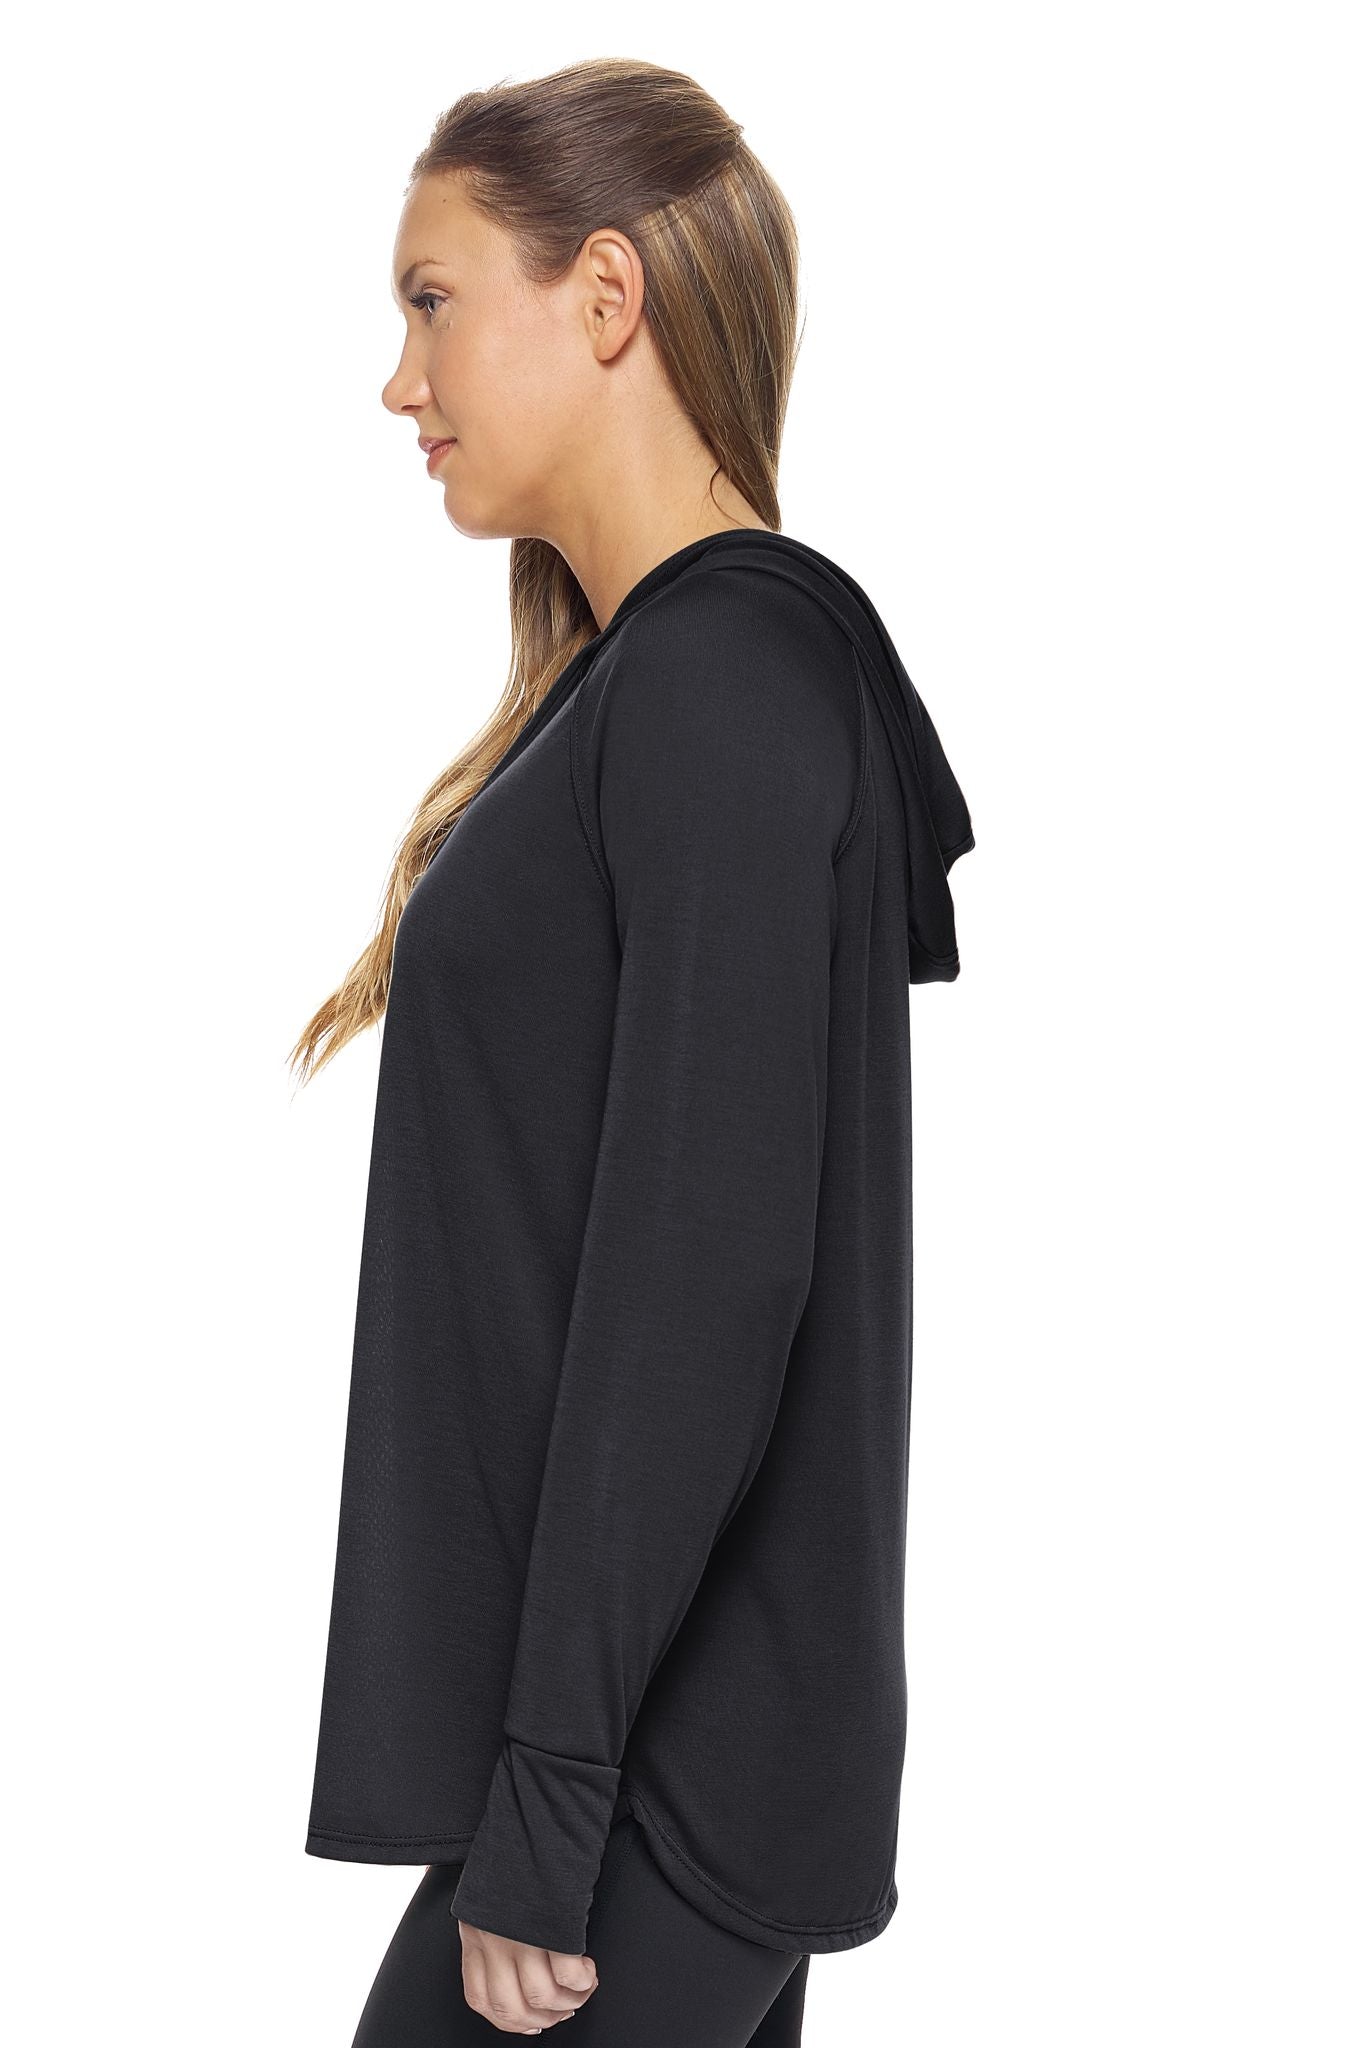 Expert Brand Soft Casual Siro Hoodie Shirt - DressbarnActivewear